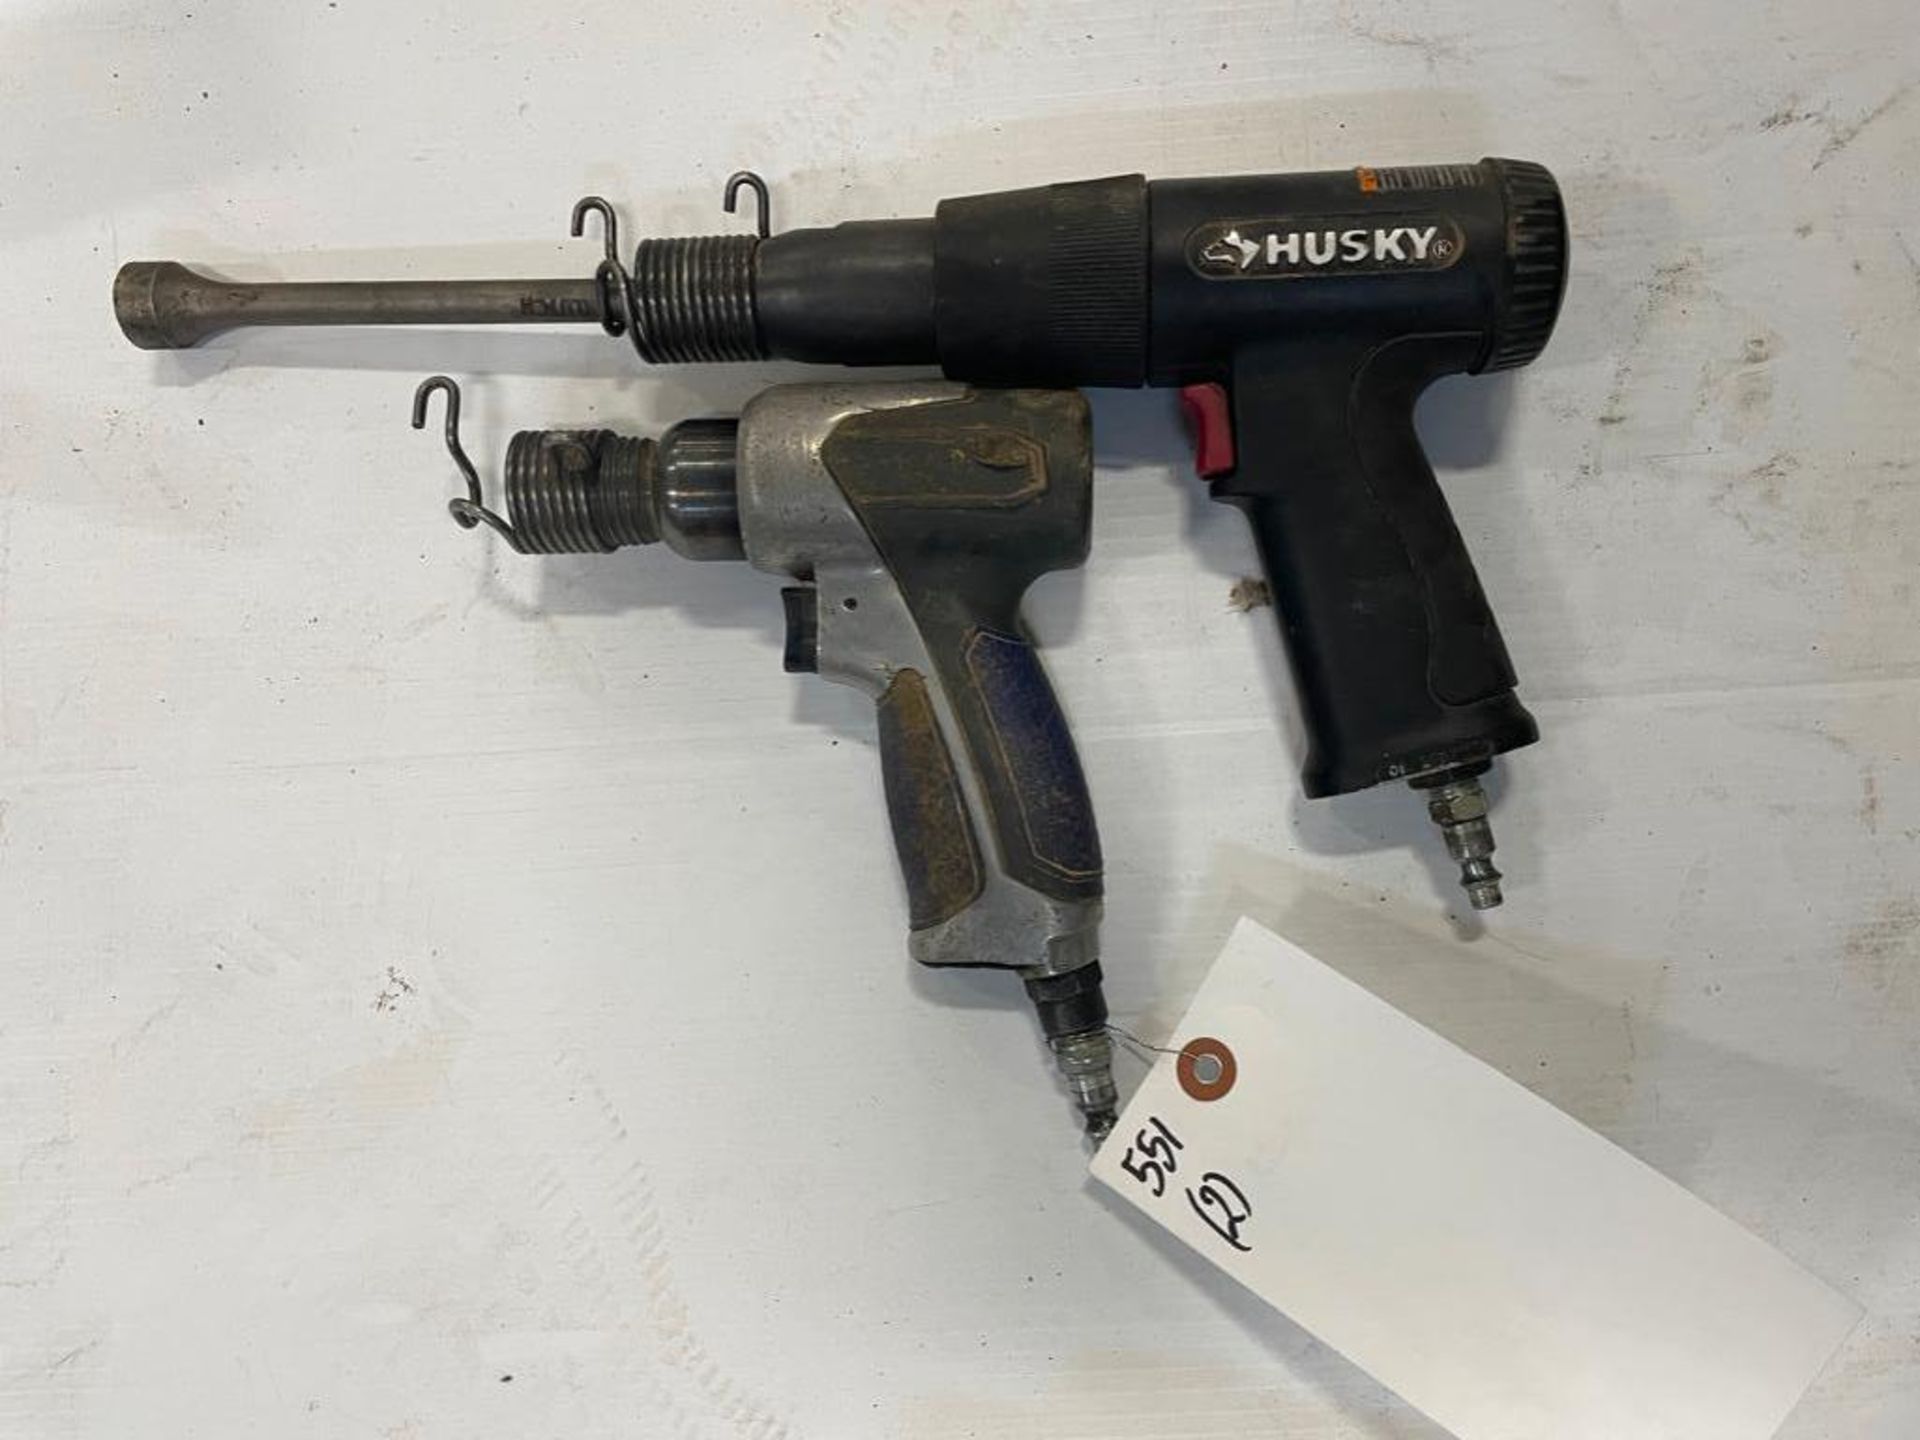 (2) Pneumatic Air Tools Husky Vibration Damped Air Hammer, Serial #17031235 & Kobalt. Located in Haz